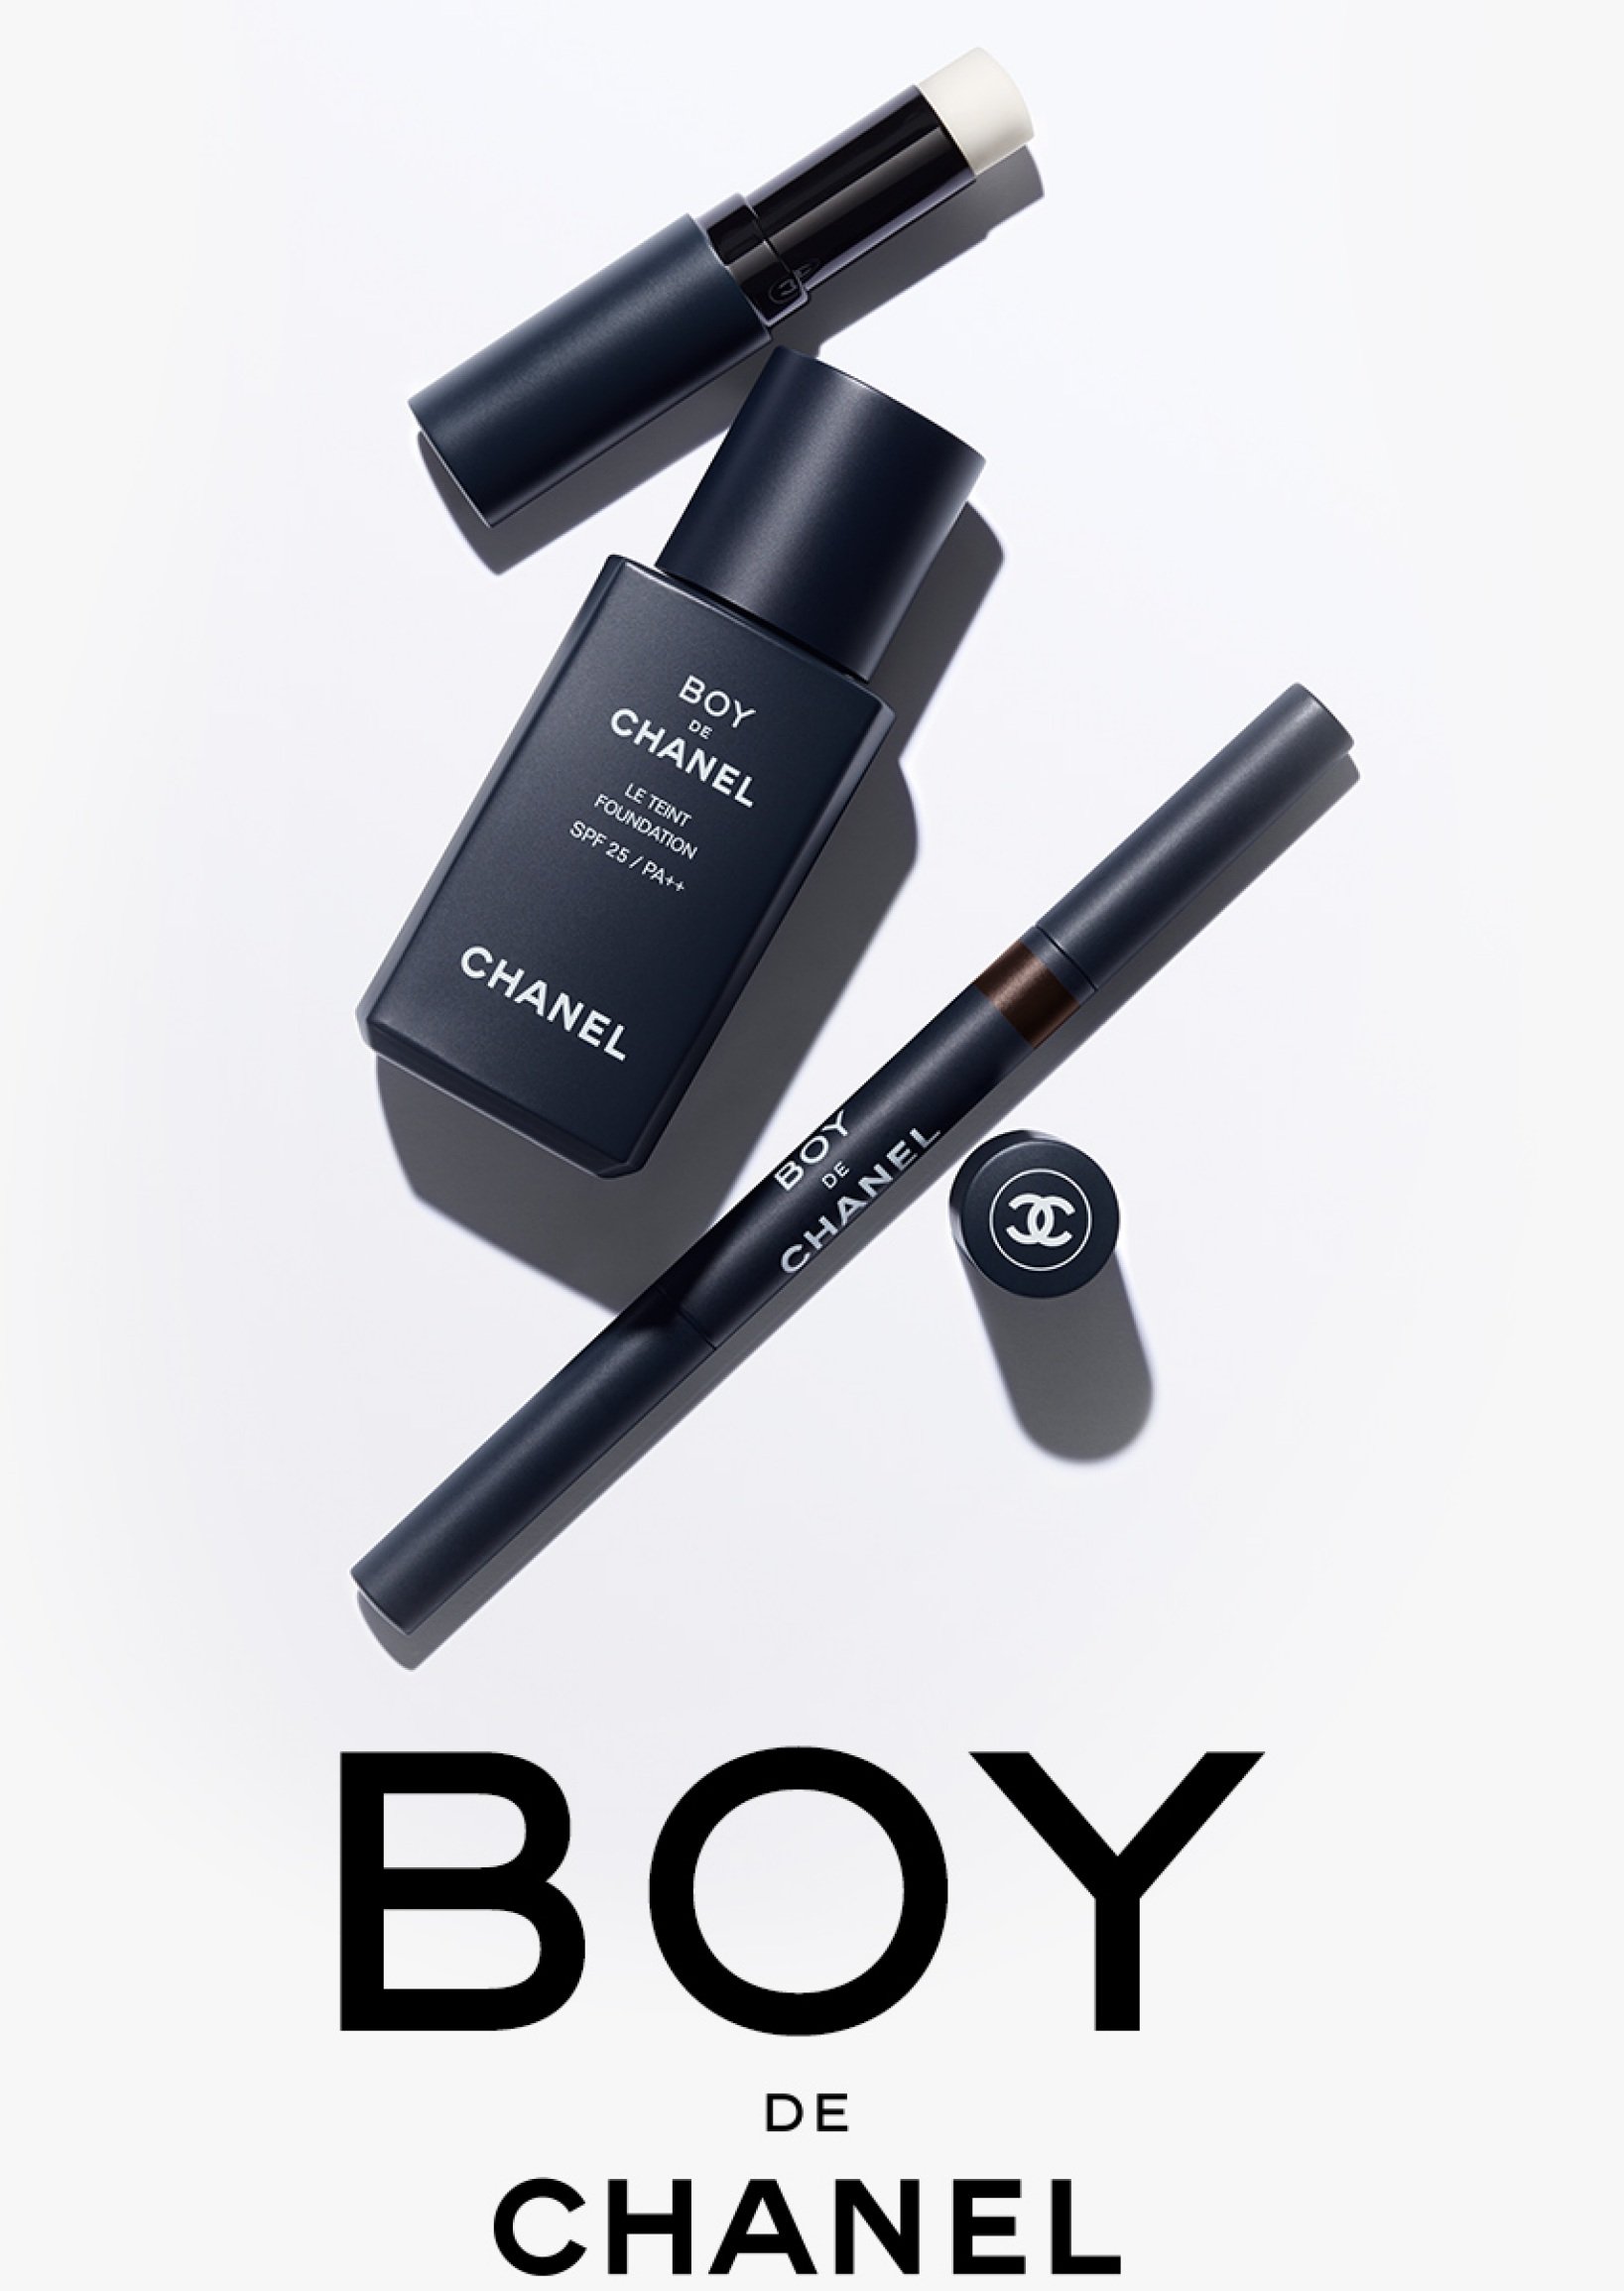 Boy De Chanel: la collezione makeup uomo firmata Chanel